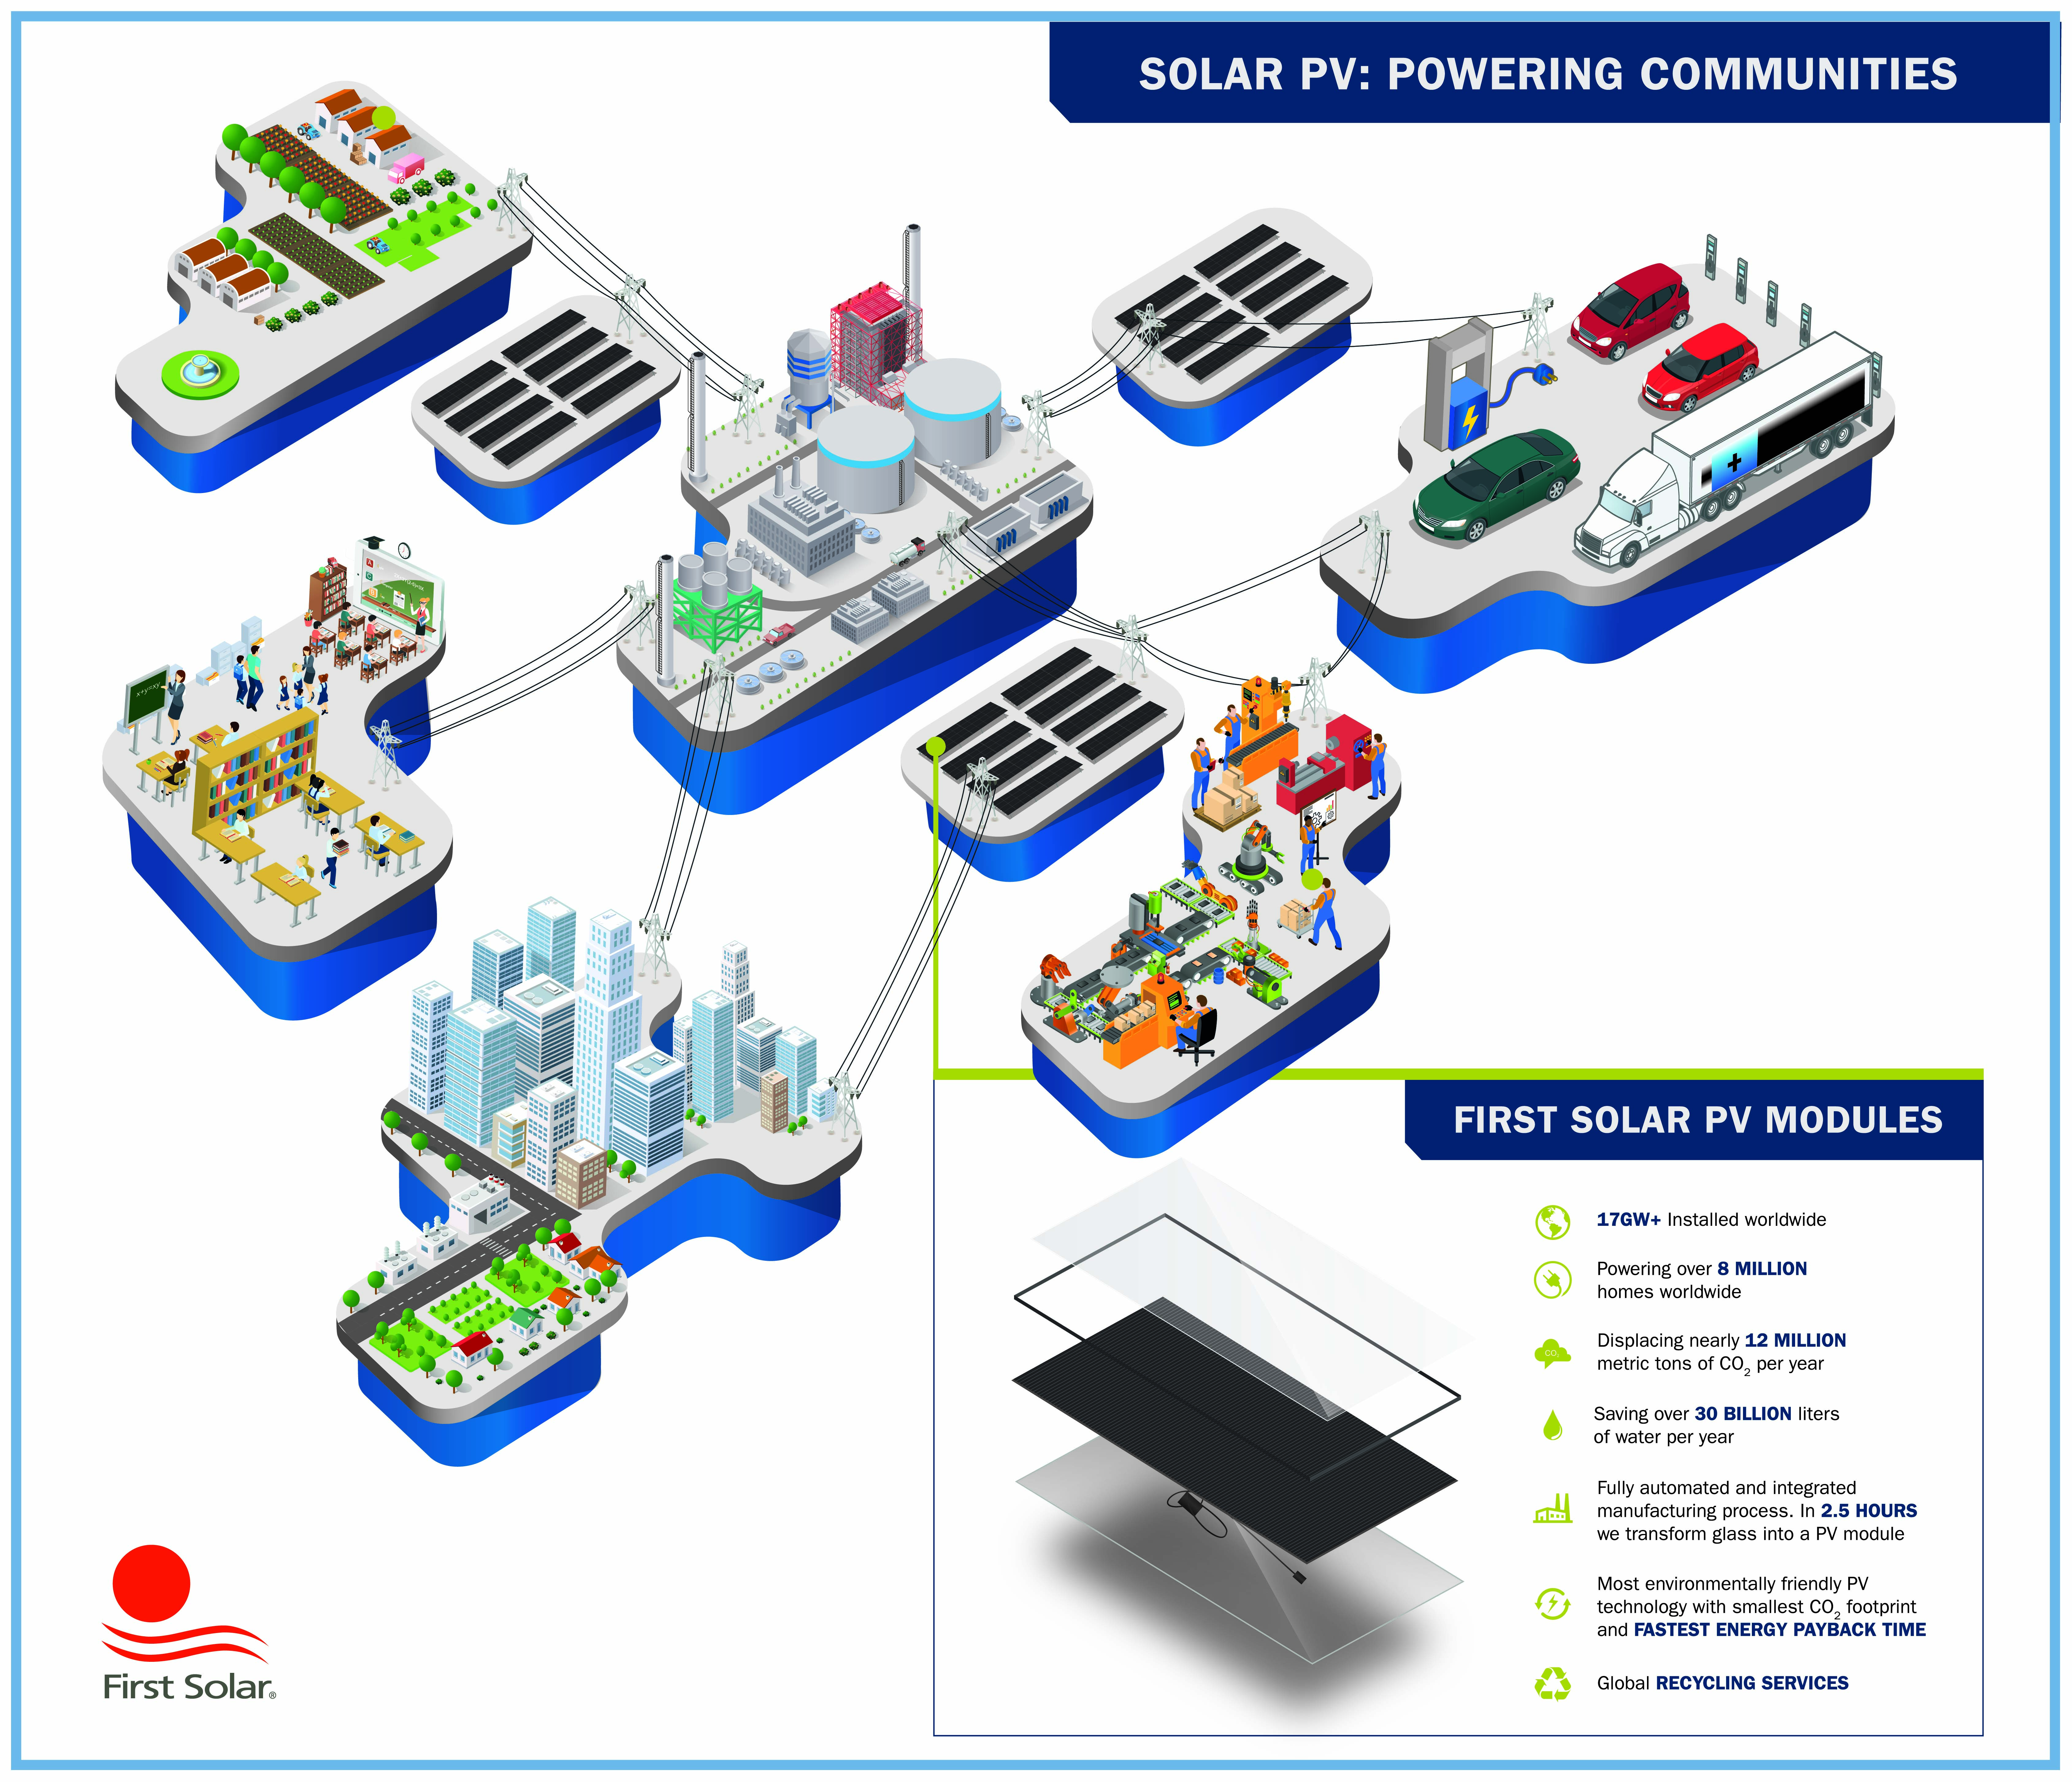 Solar PV: Power Communities|